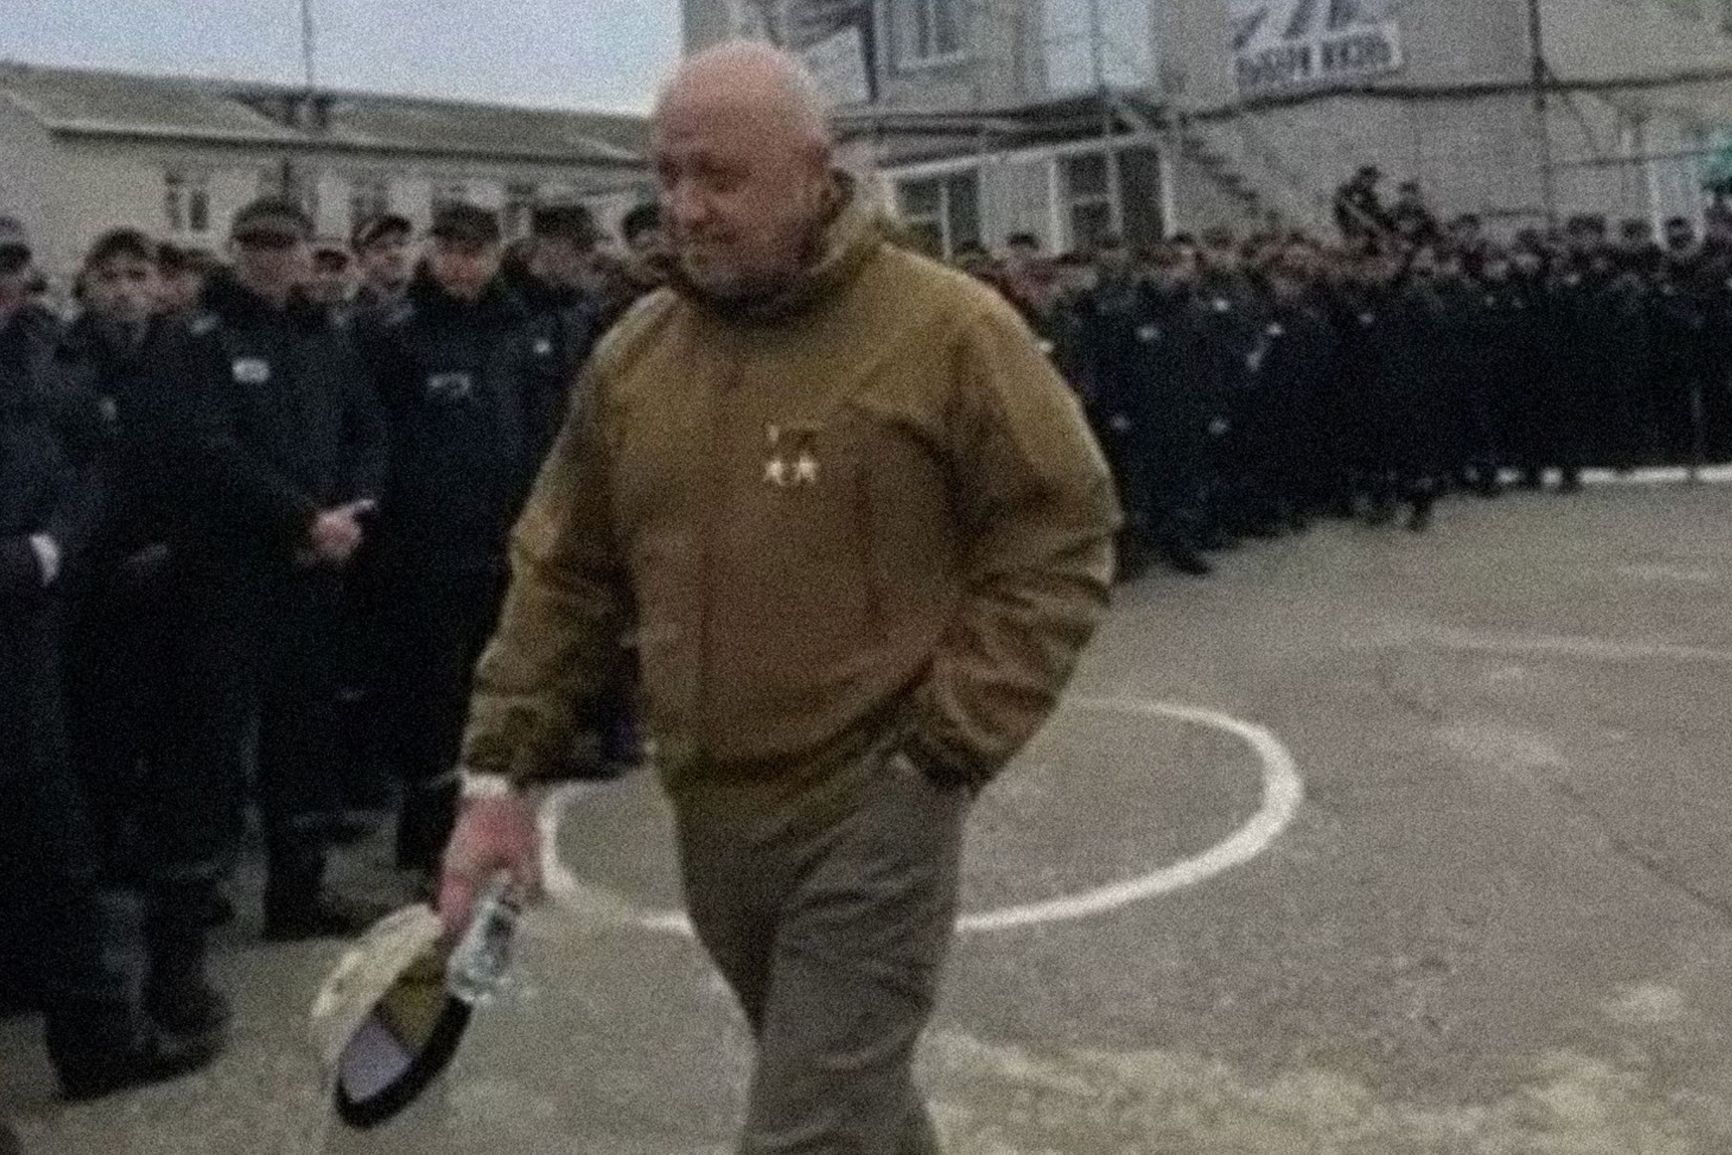 Evgeny Prigozhin recruits inmates into the PMC